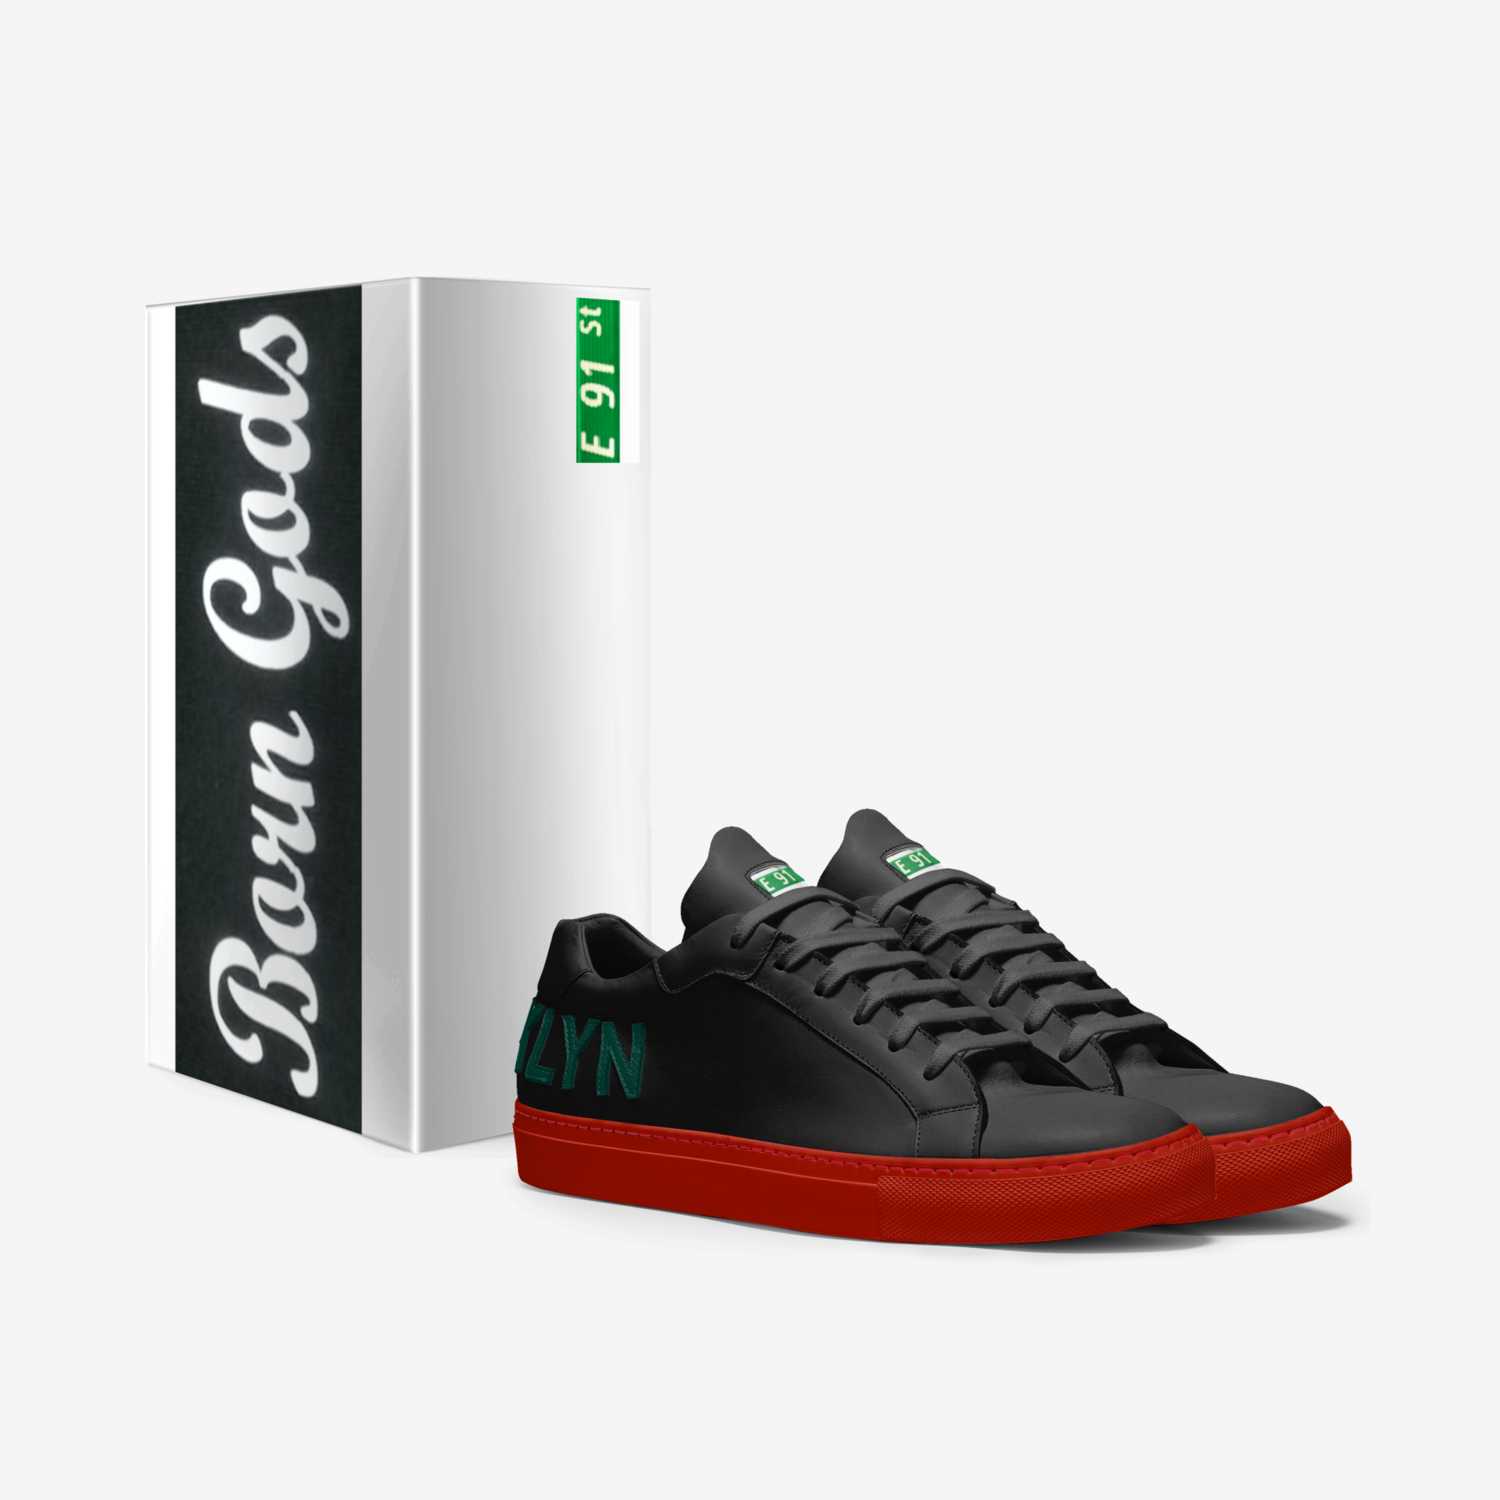 Boom-Blocks  custom made in Italy shoes by Rashawn Reape | Box view